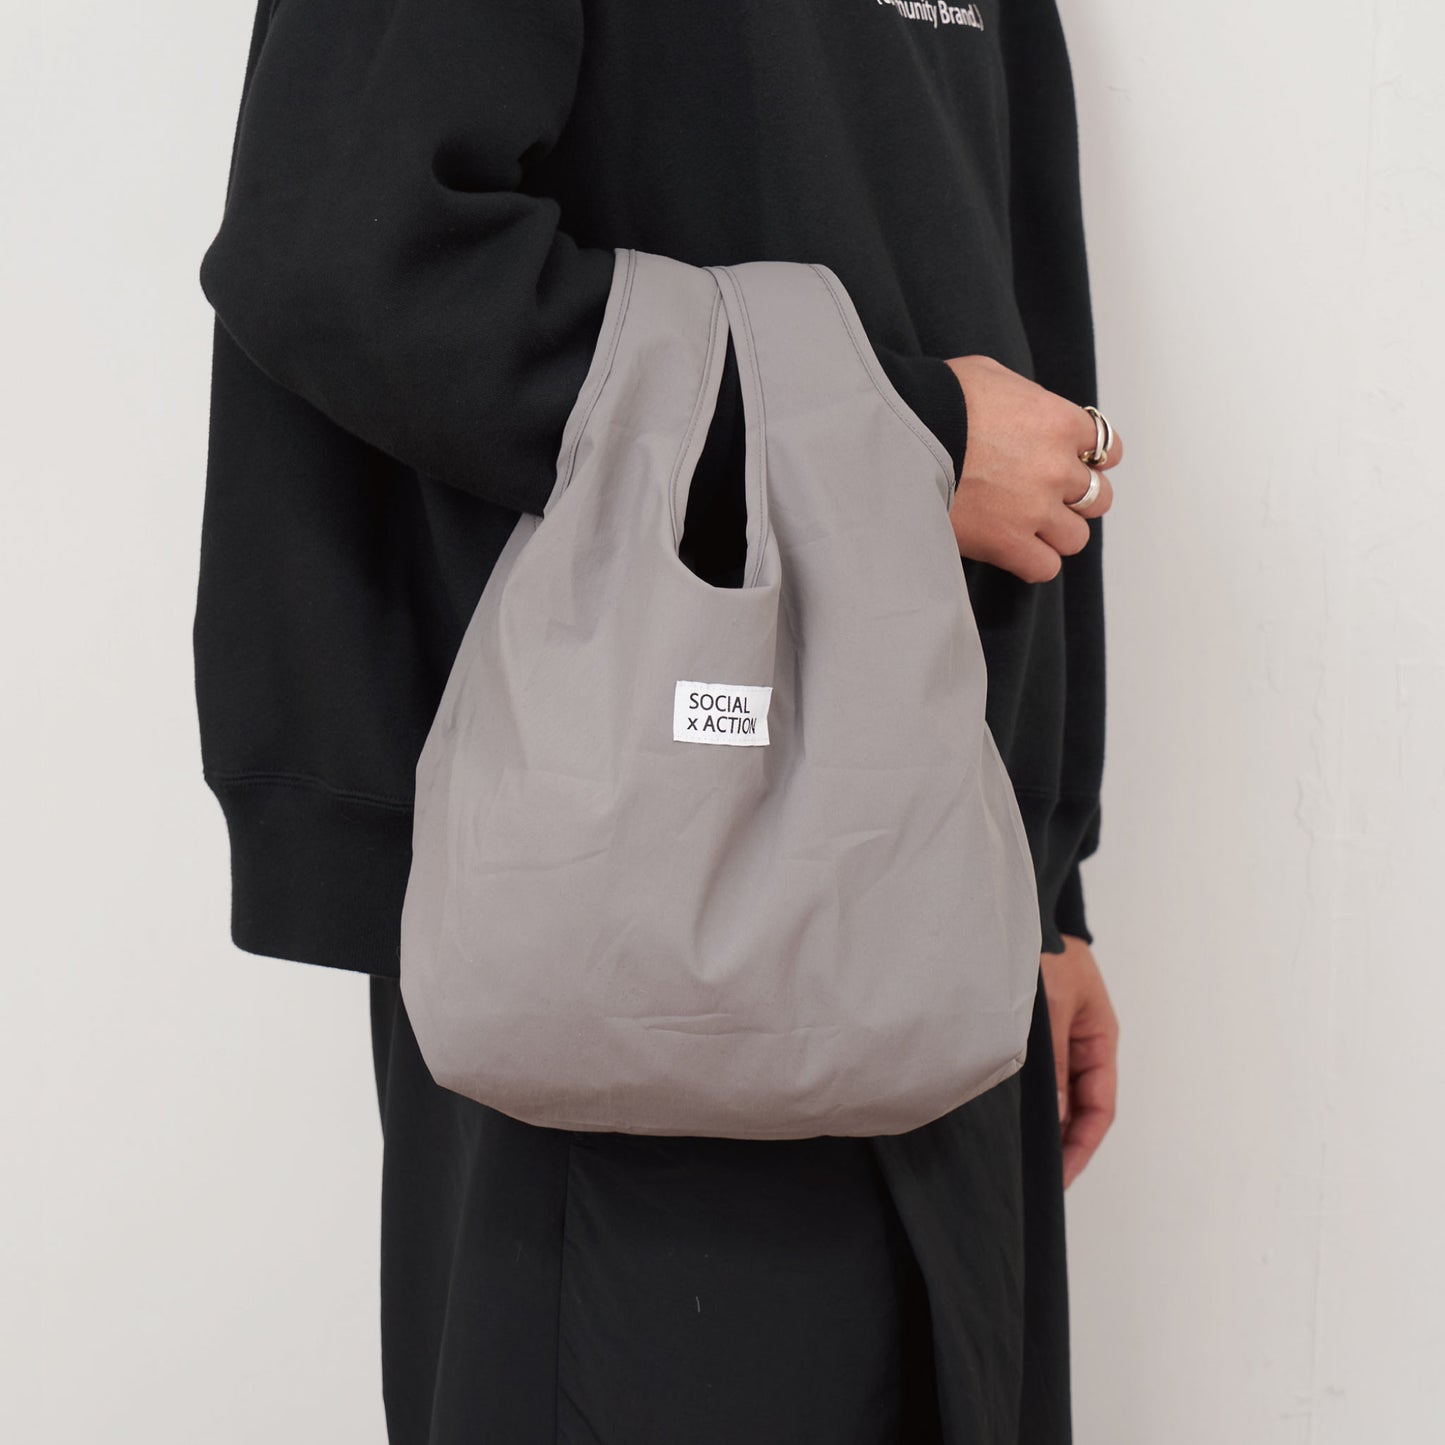 RE:BAG「CONVENI」color:絹鼠色/キヌネズイロ